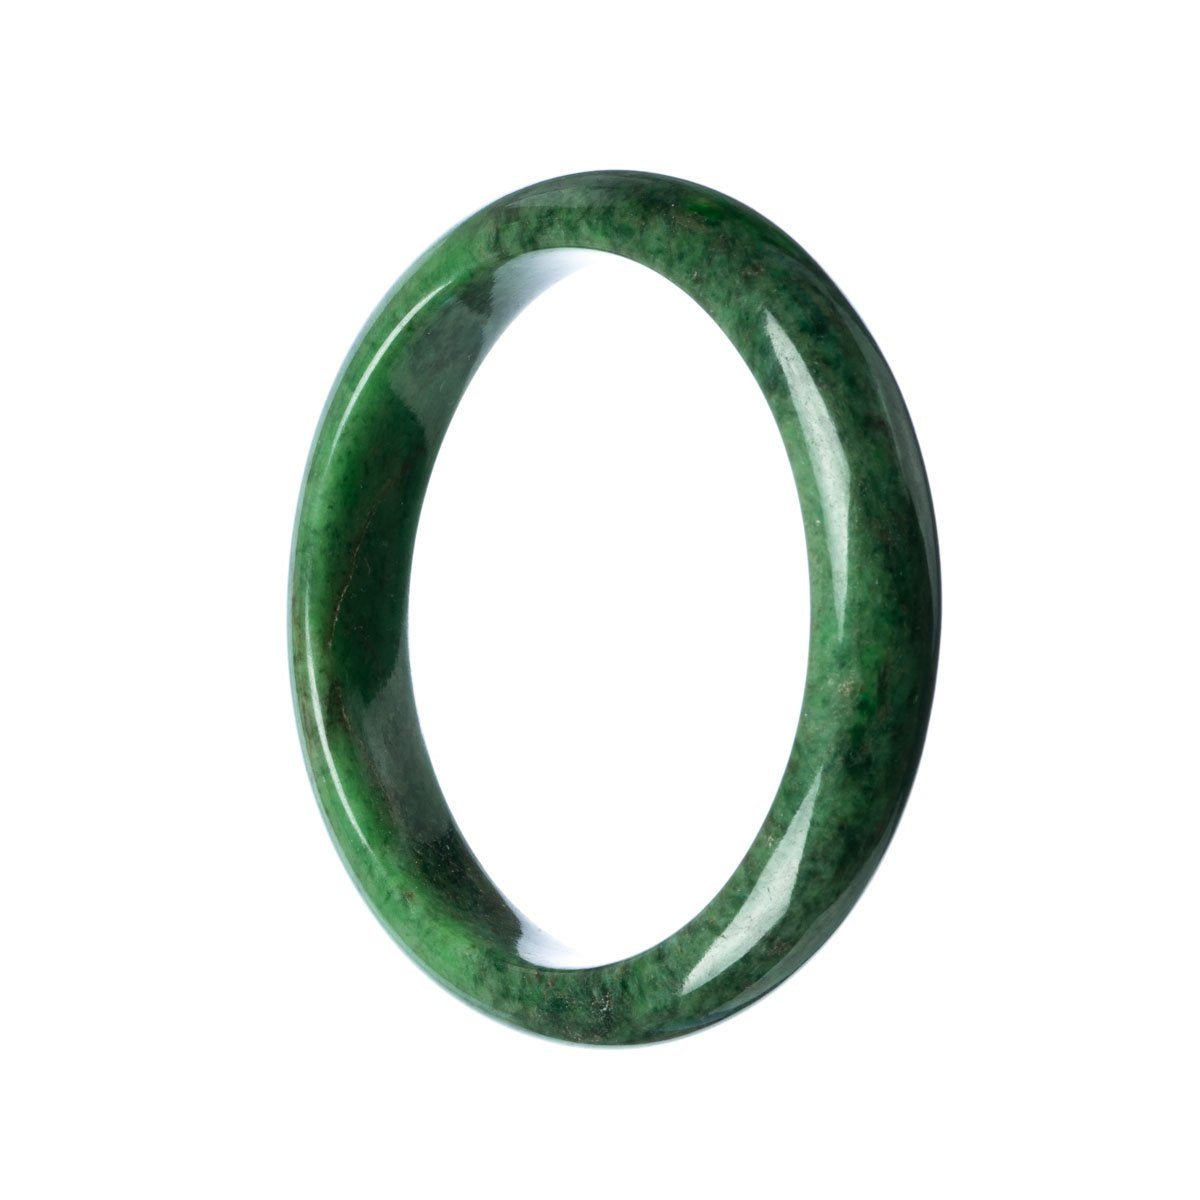 A beautiful half moon-shaped green jadeite bracelet, made from genuine Grade A jade.